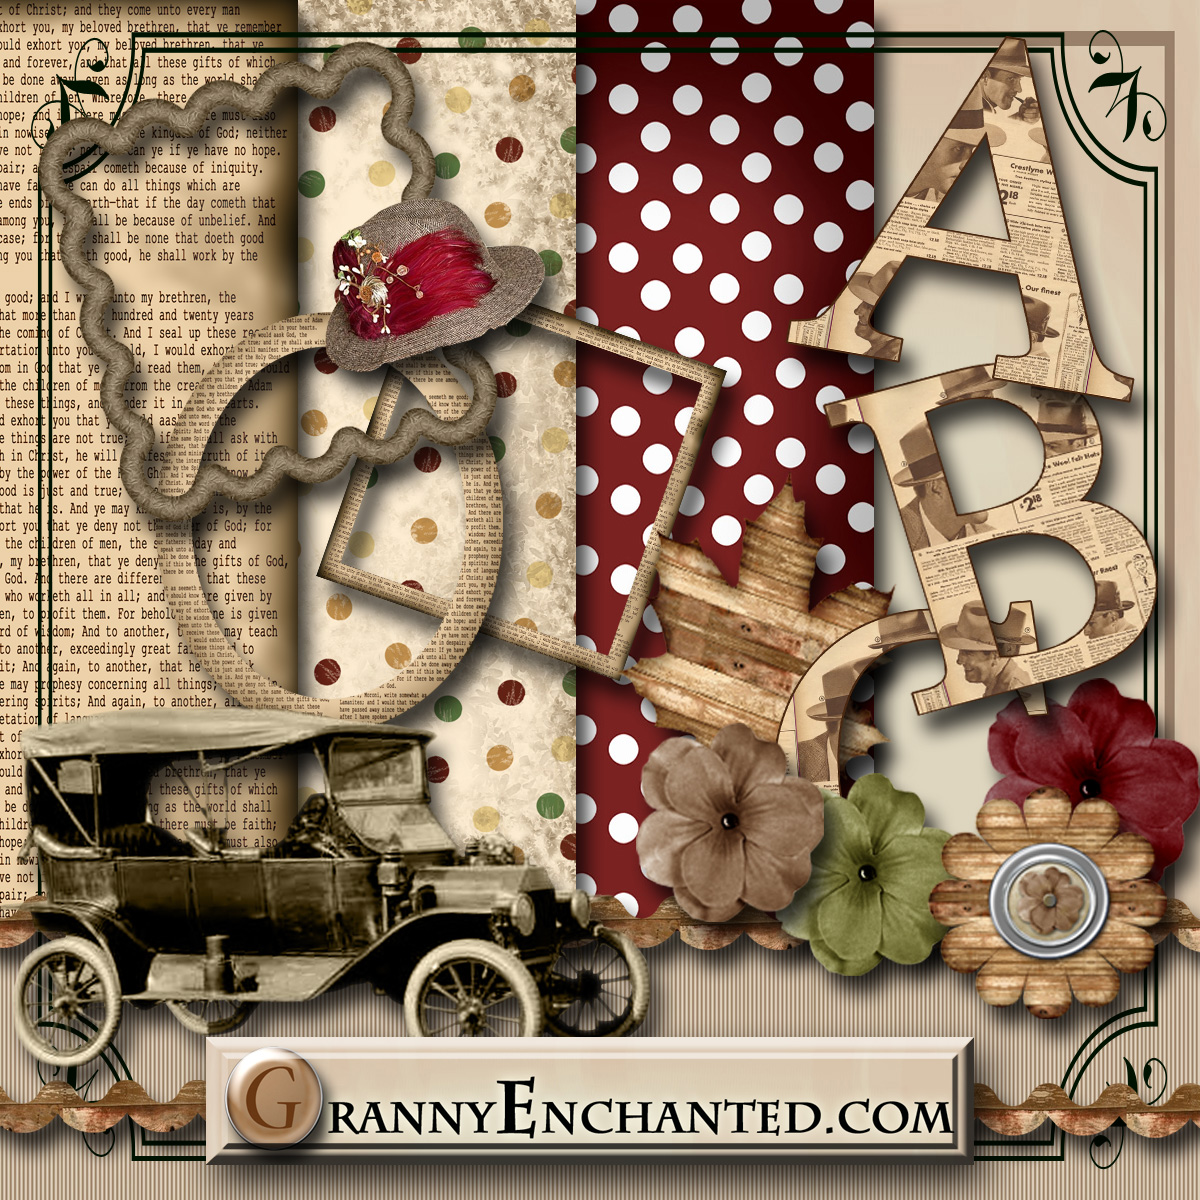 granny-enchanted-s-blog-free-newsprint-digital-scrapbook-kit-01